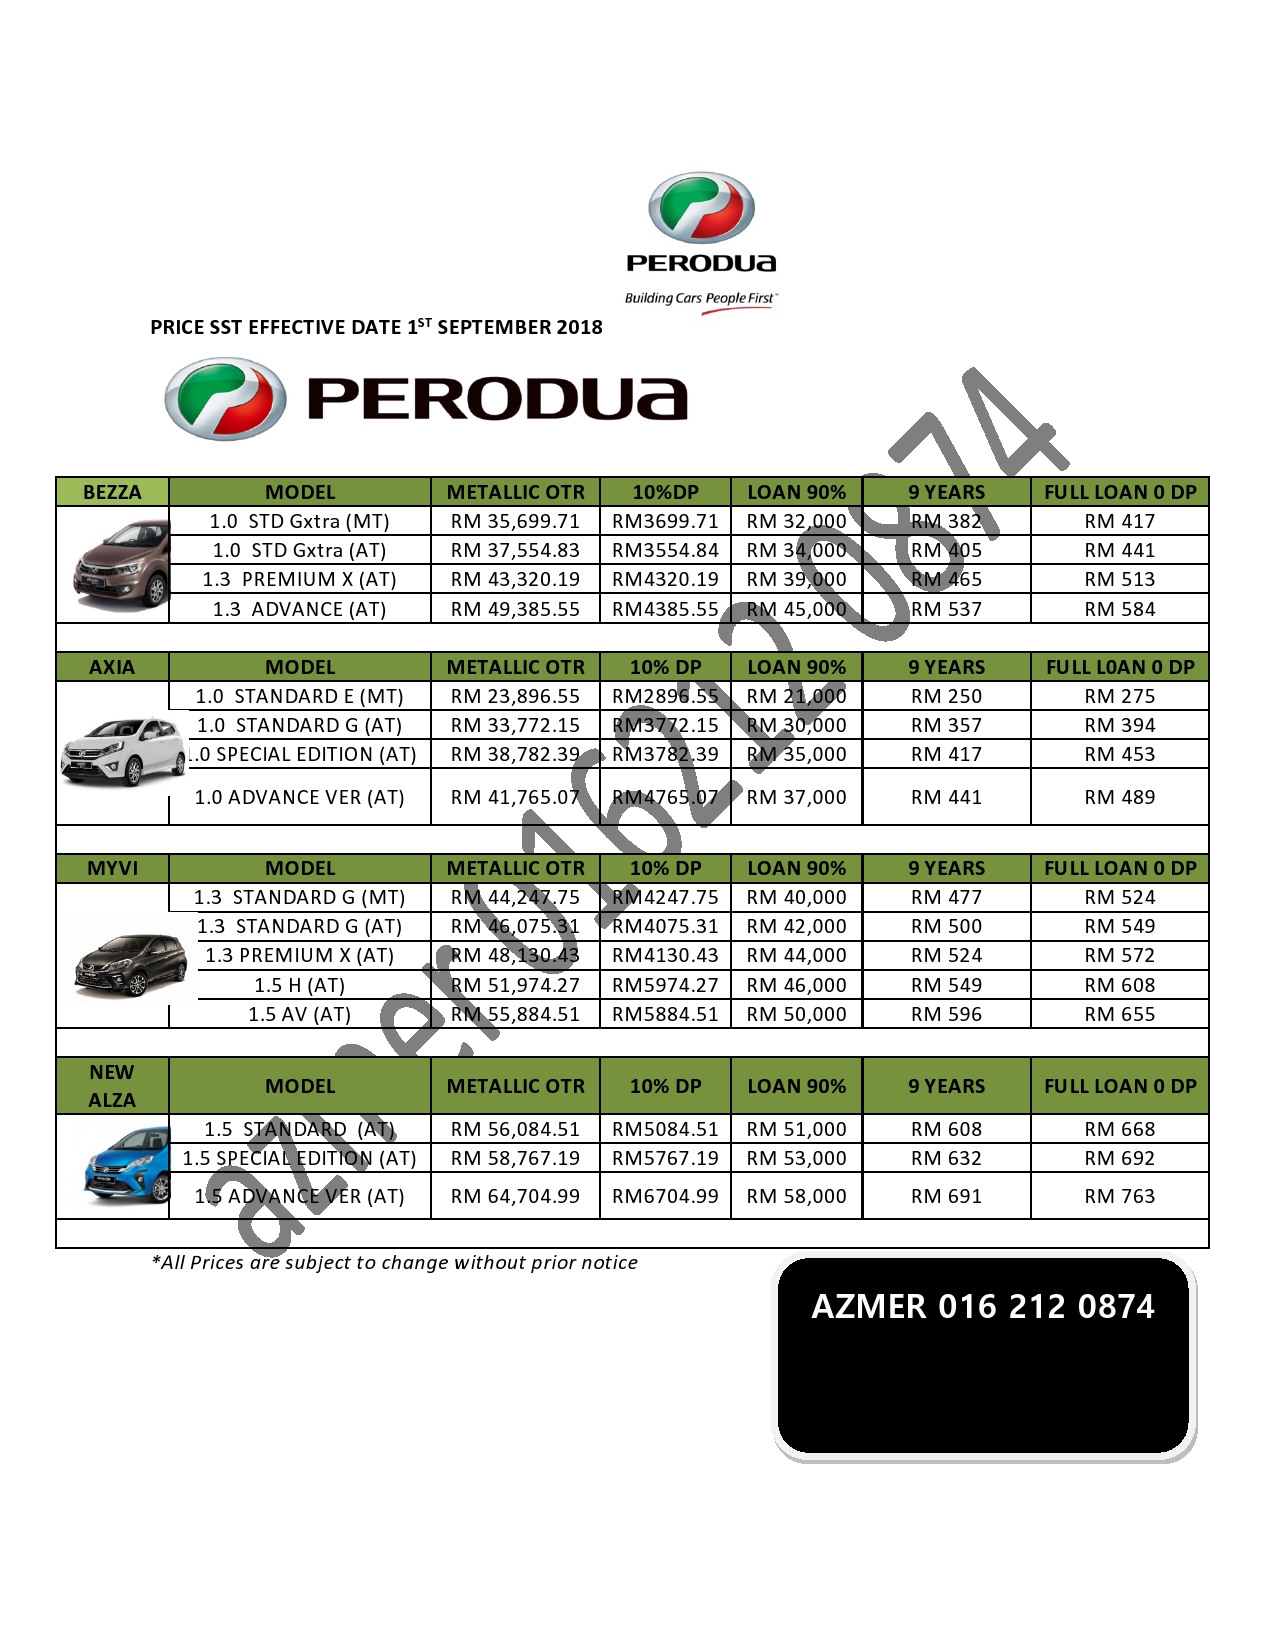 Perodua Myvi Promotion December 2018 - Kebaya Glamar